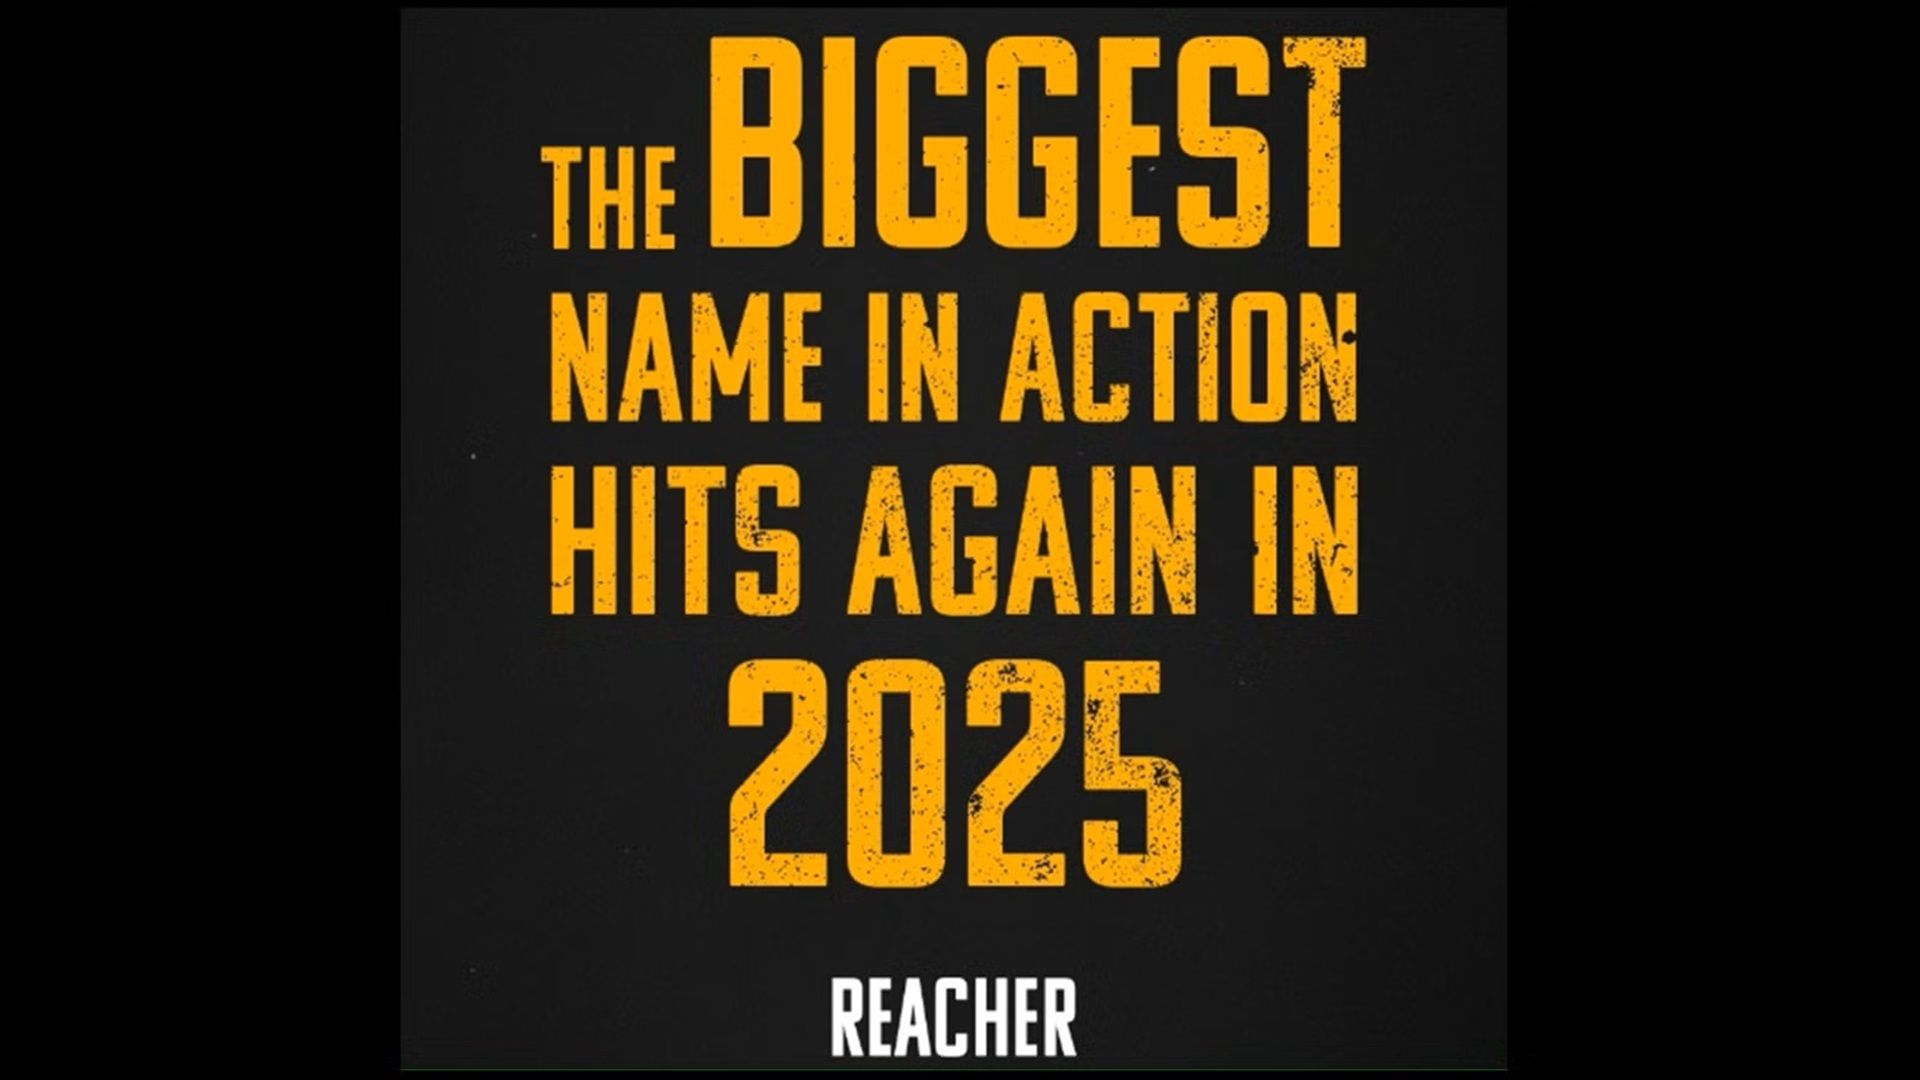 Reacher season 3 release announcement.